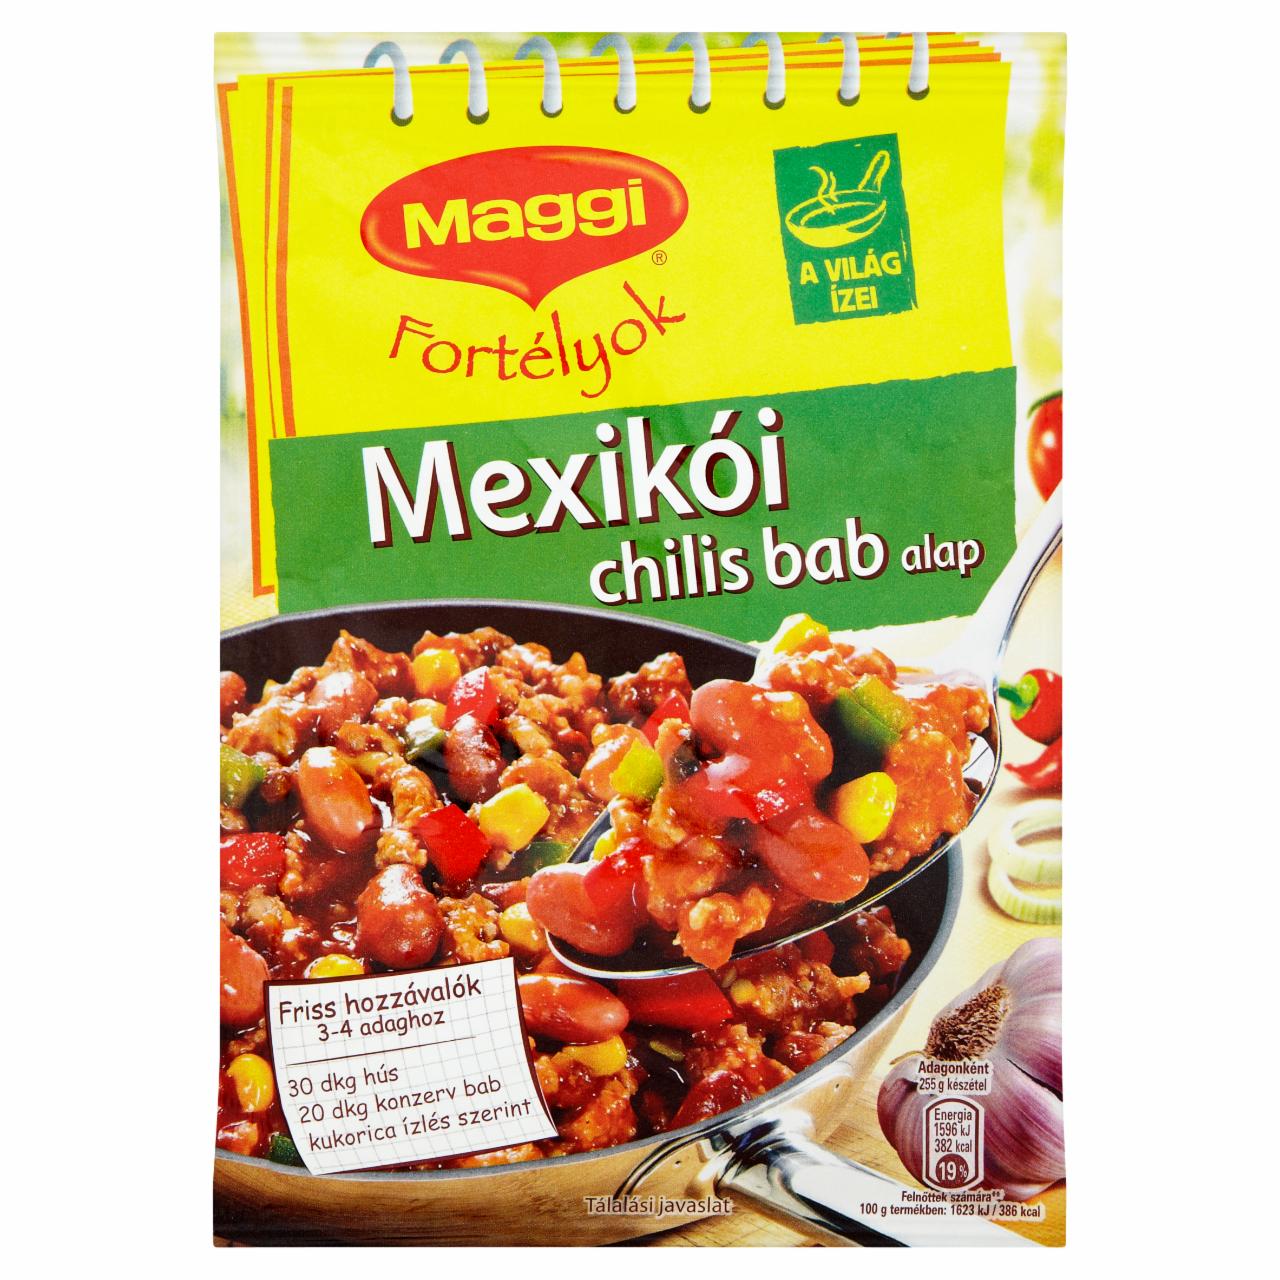 Képek - Maggi Fortélyok Mexikói chilis bab alap 55 g